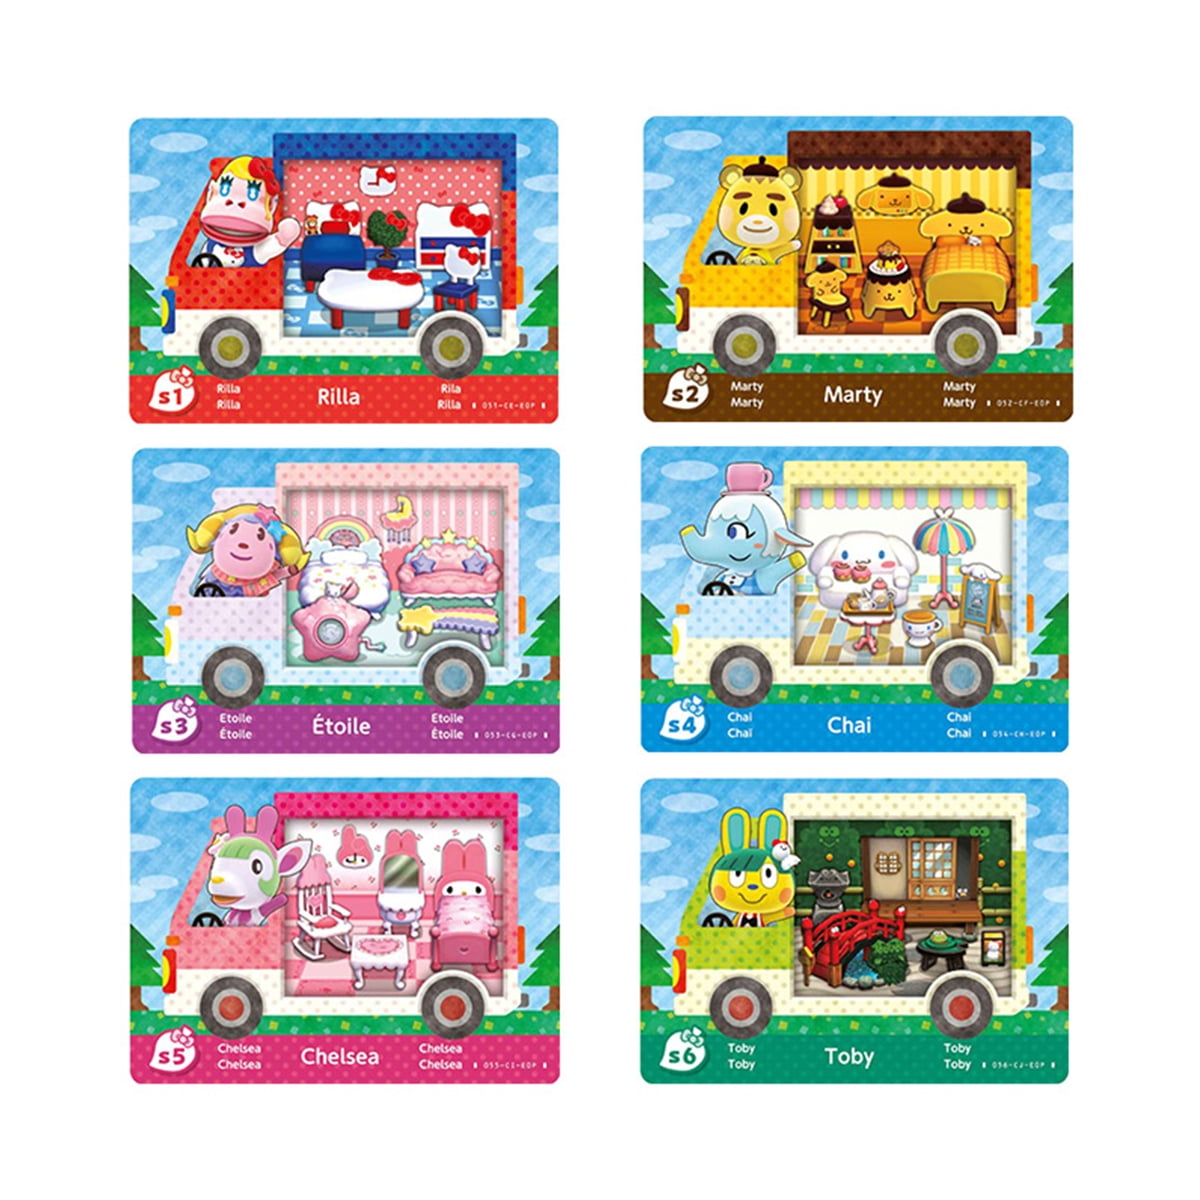 6 pcs Collaboration Pack Animal Crossing MINI CARDS new horizons Sanrio  amiibo Small card 6 sheets - Walmart.com